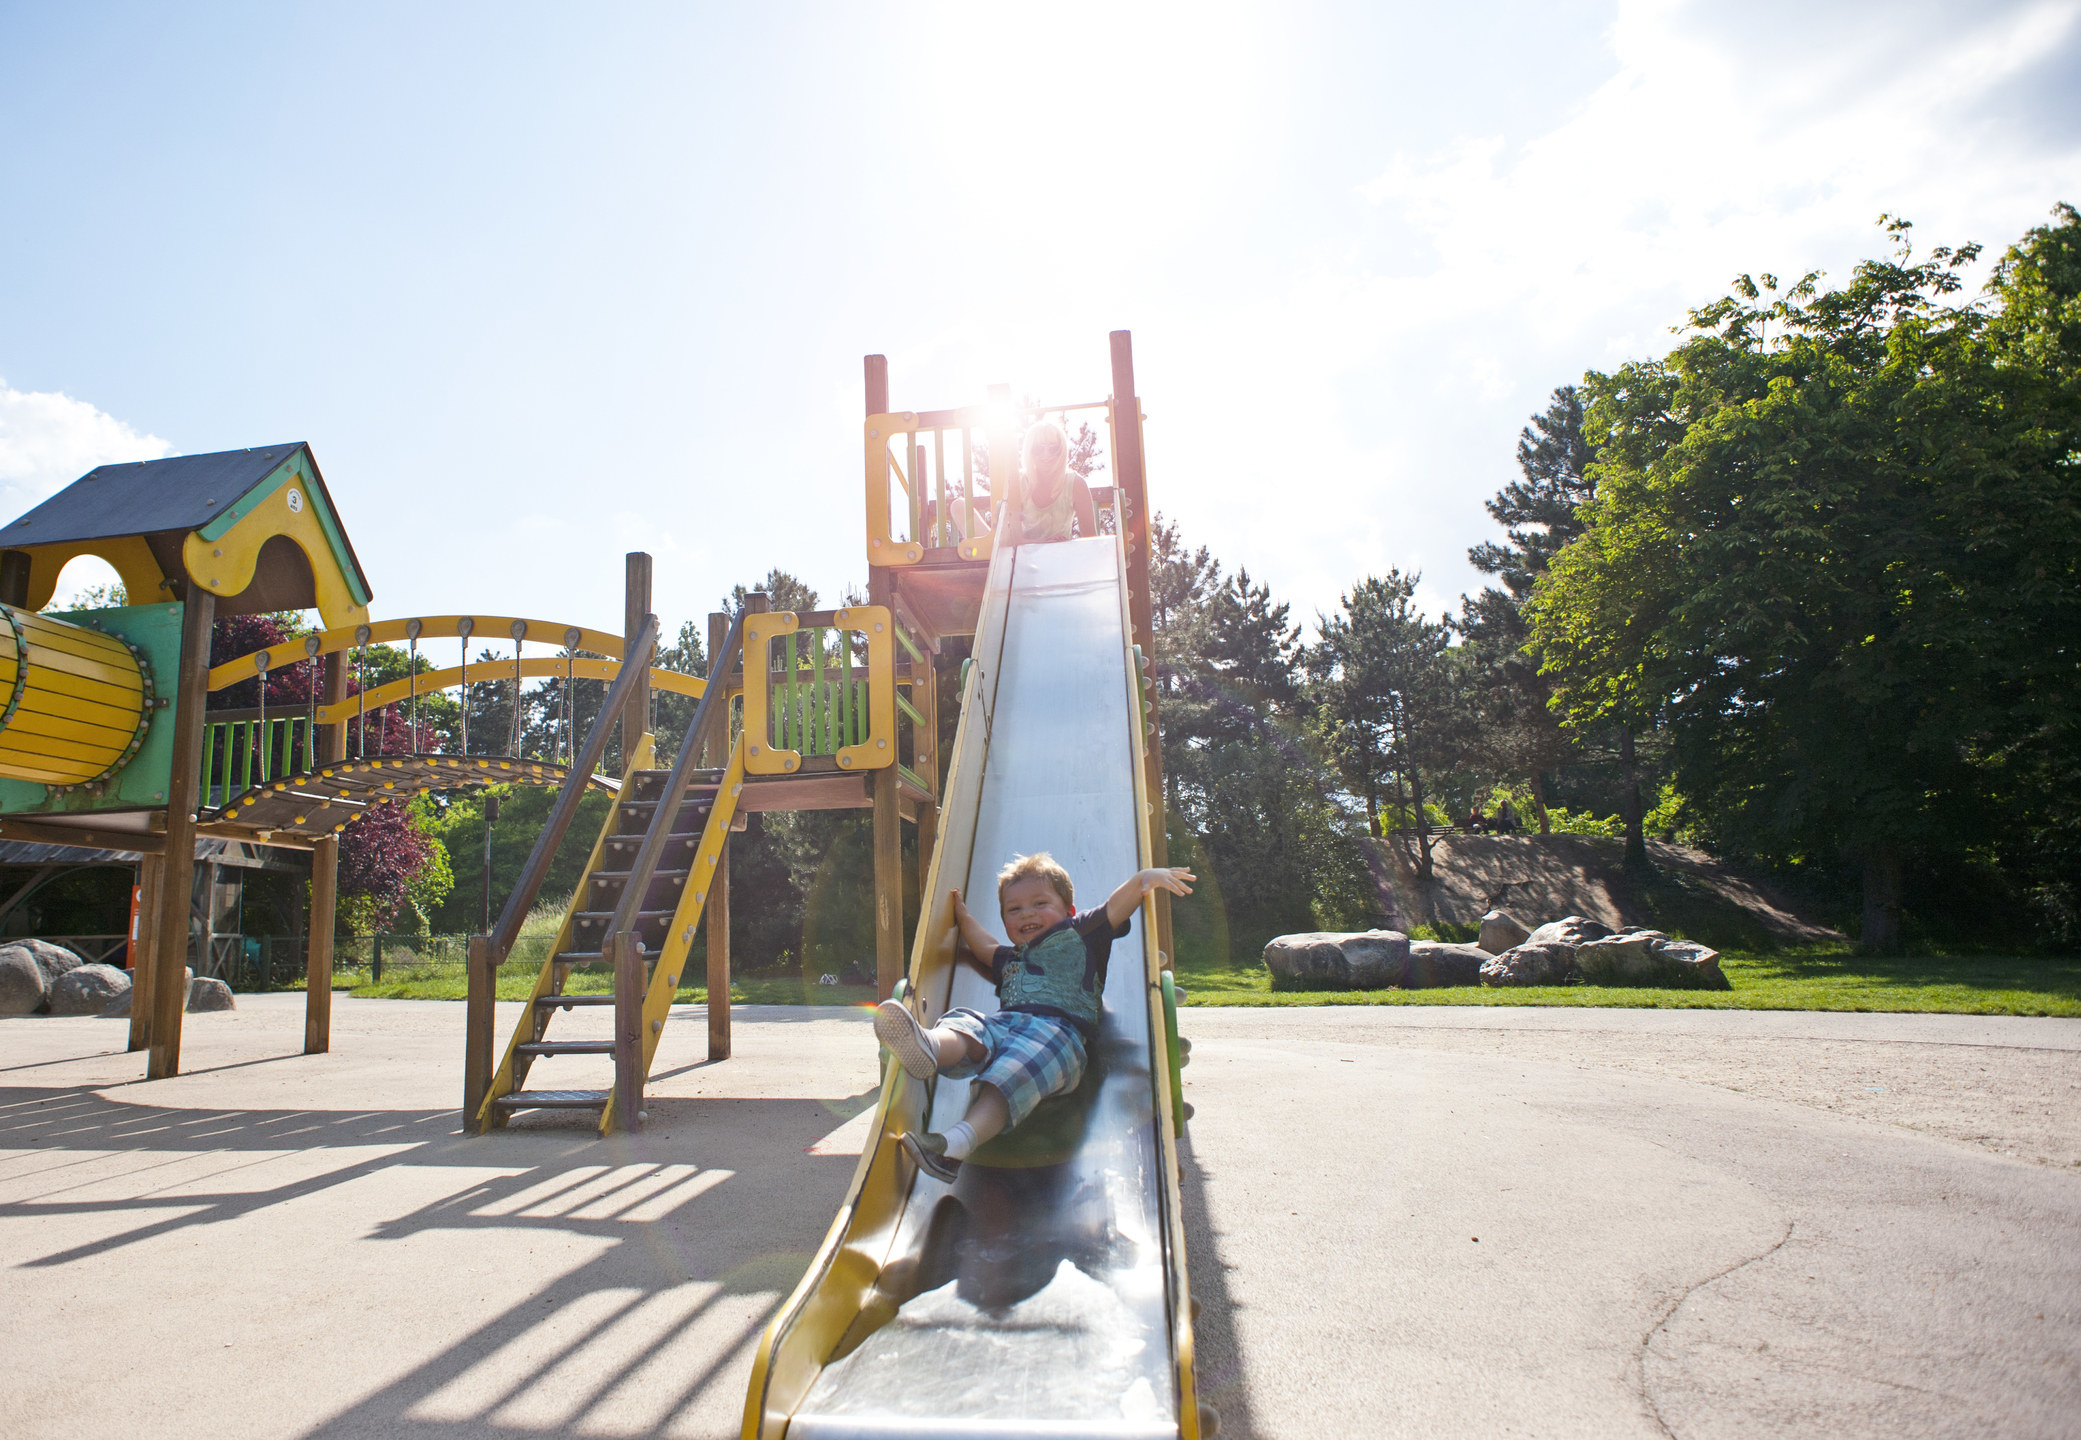 A little boy on a playground slide